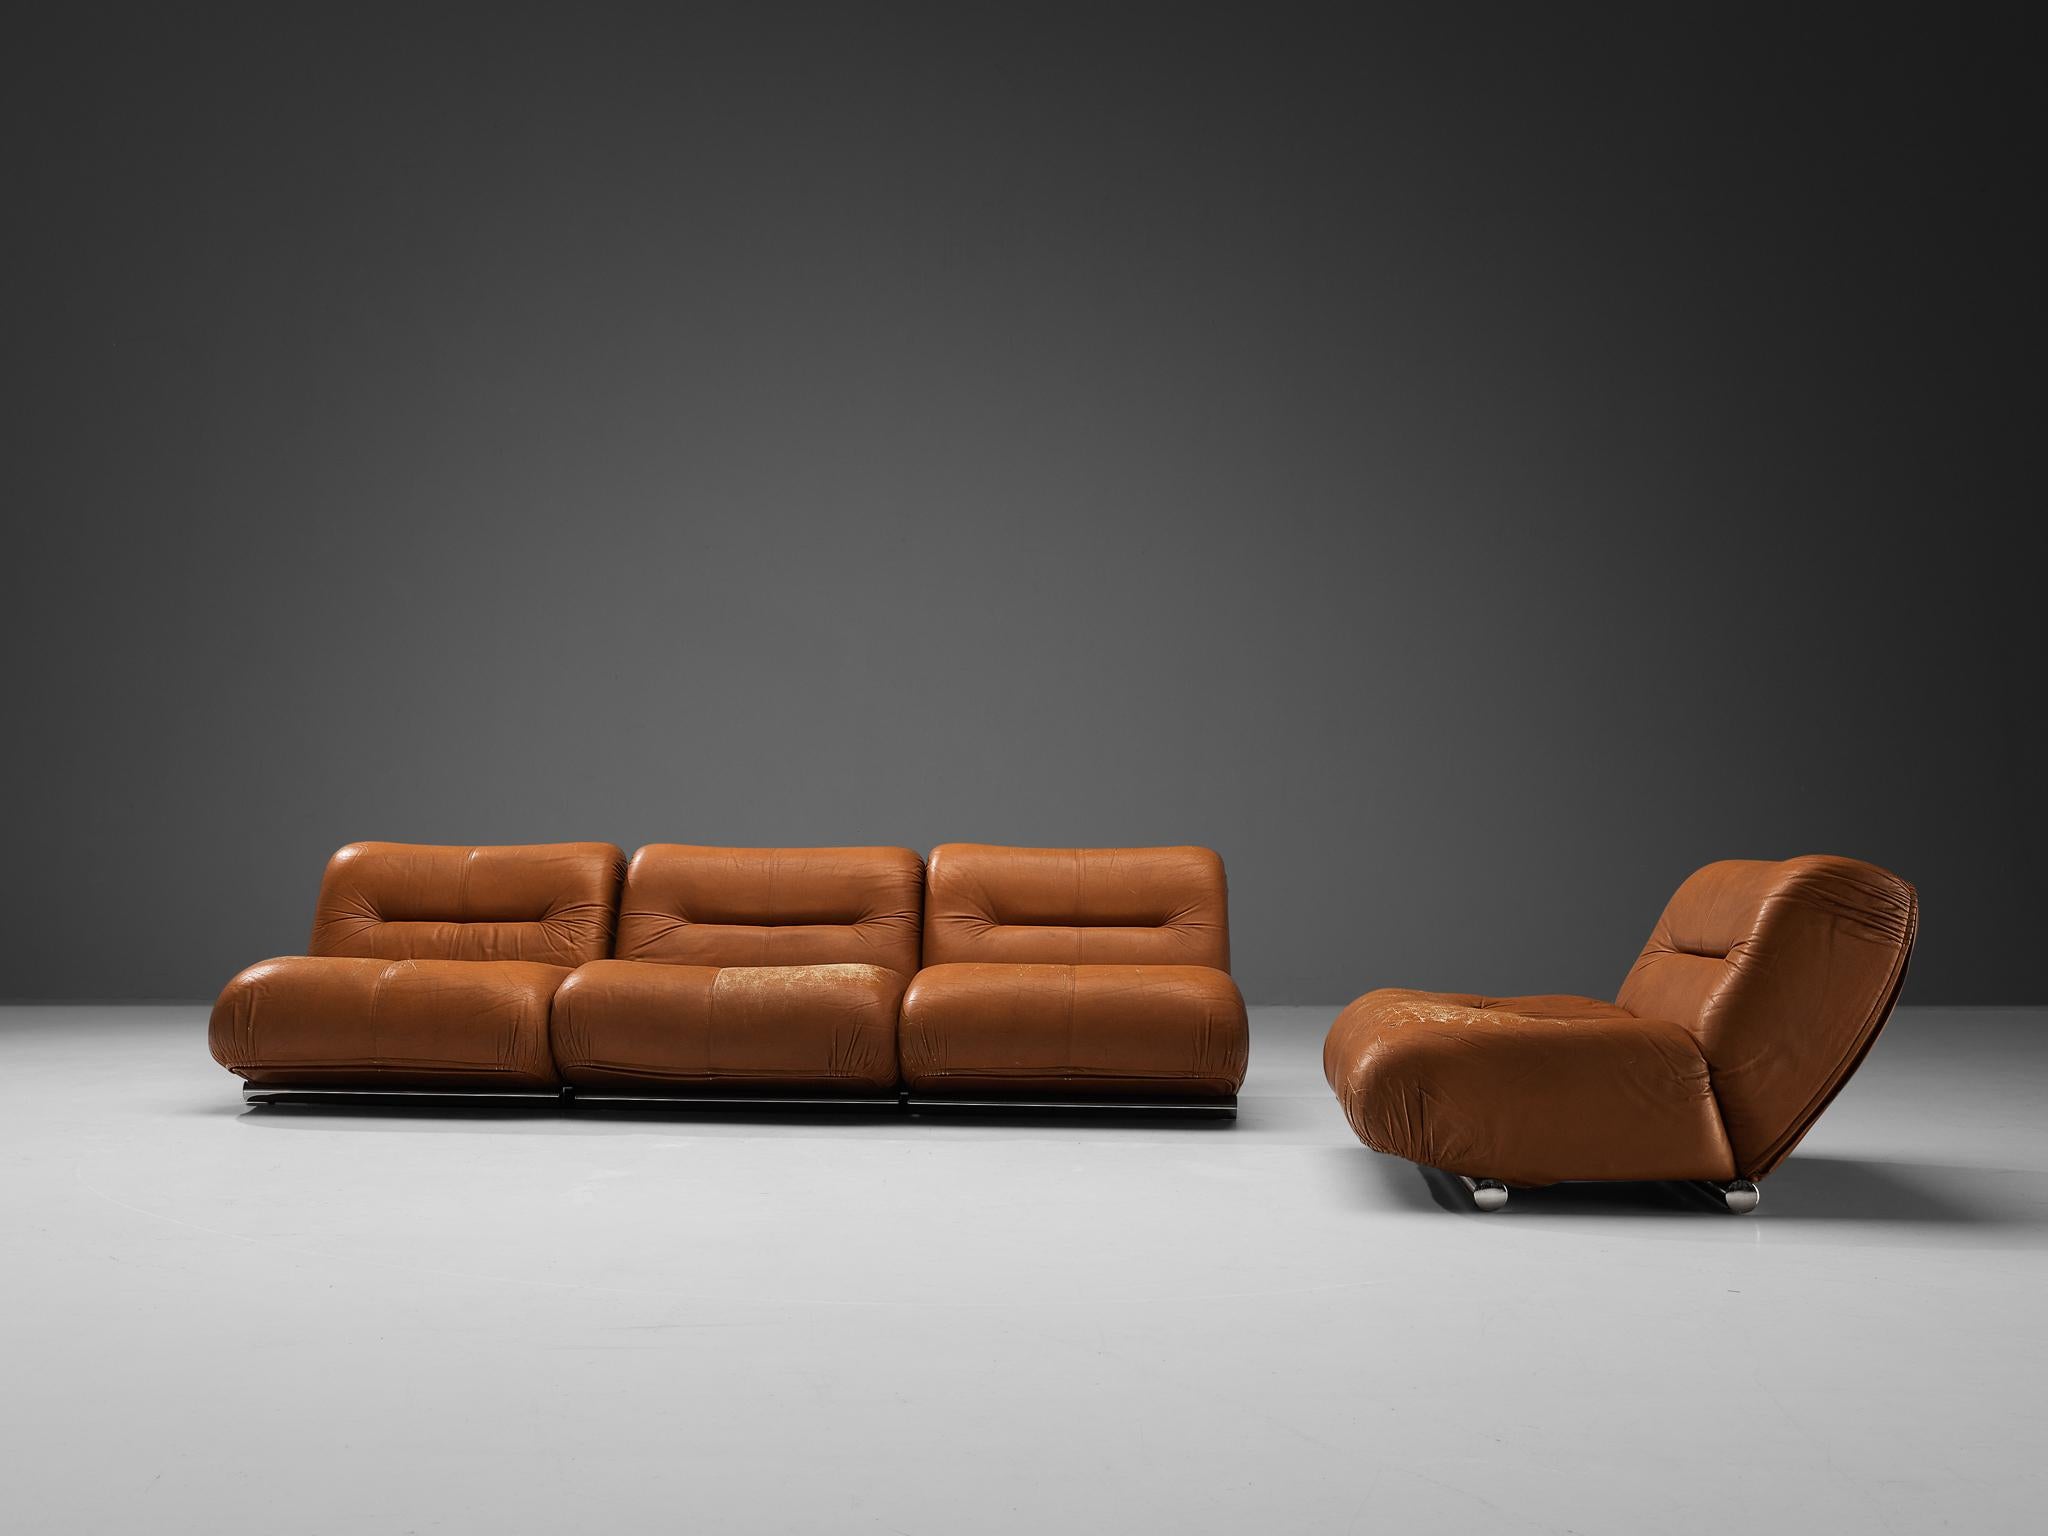 Late 20th Century Giuseppe Munari Sectional Sofa in Cognac Leather